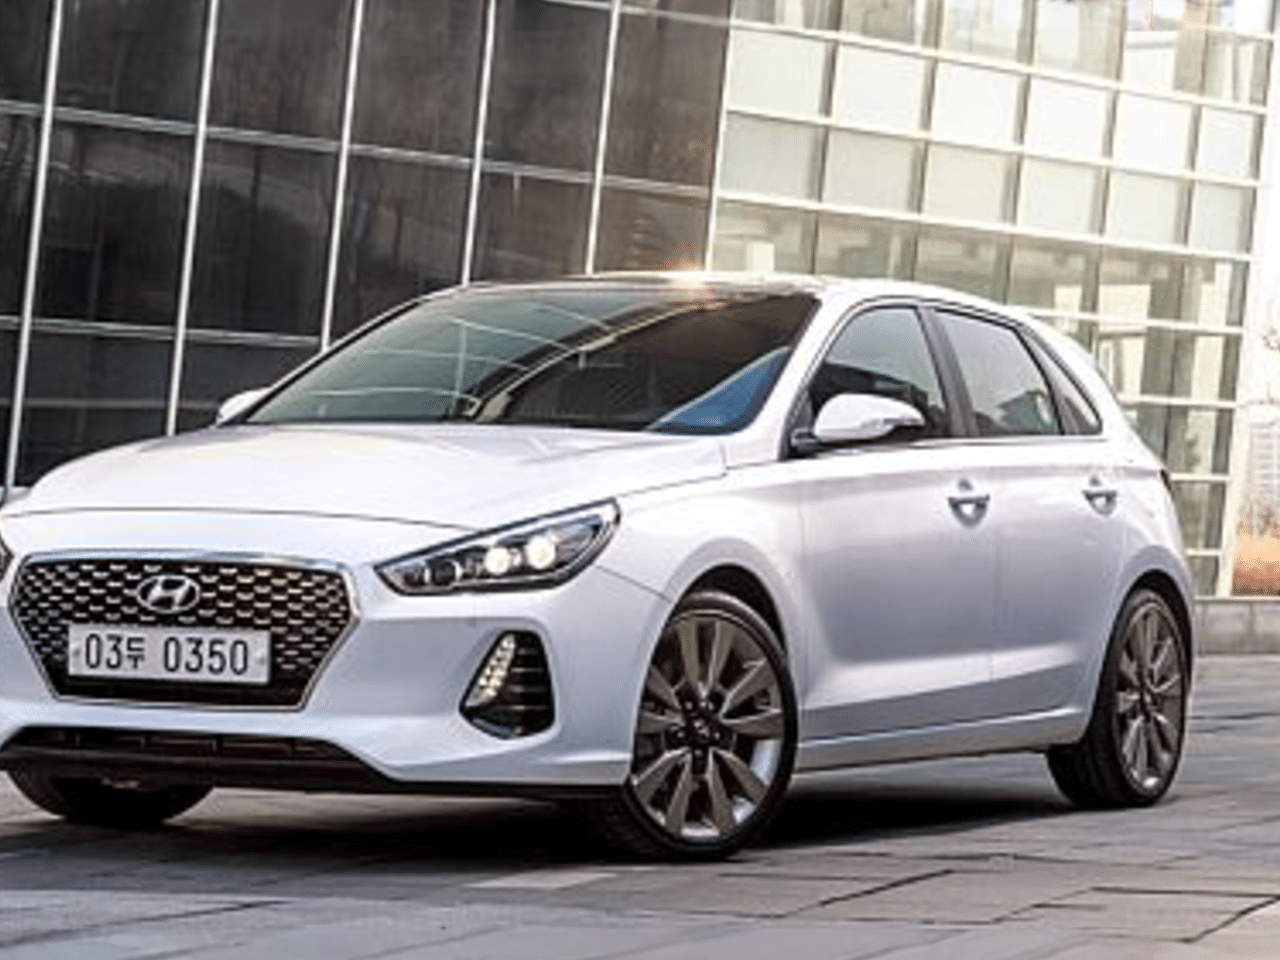 Hyundai's New Kona Set to Take Over as the Default Small Car for Australian Customers